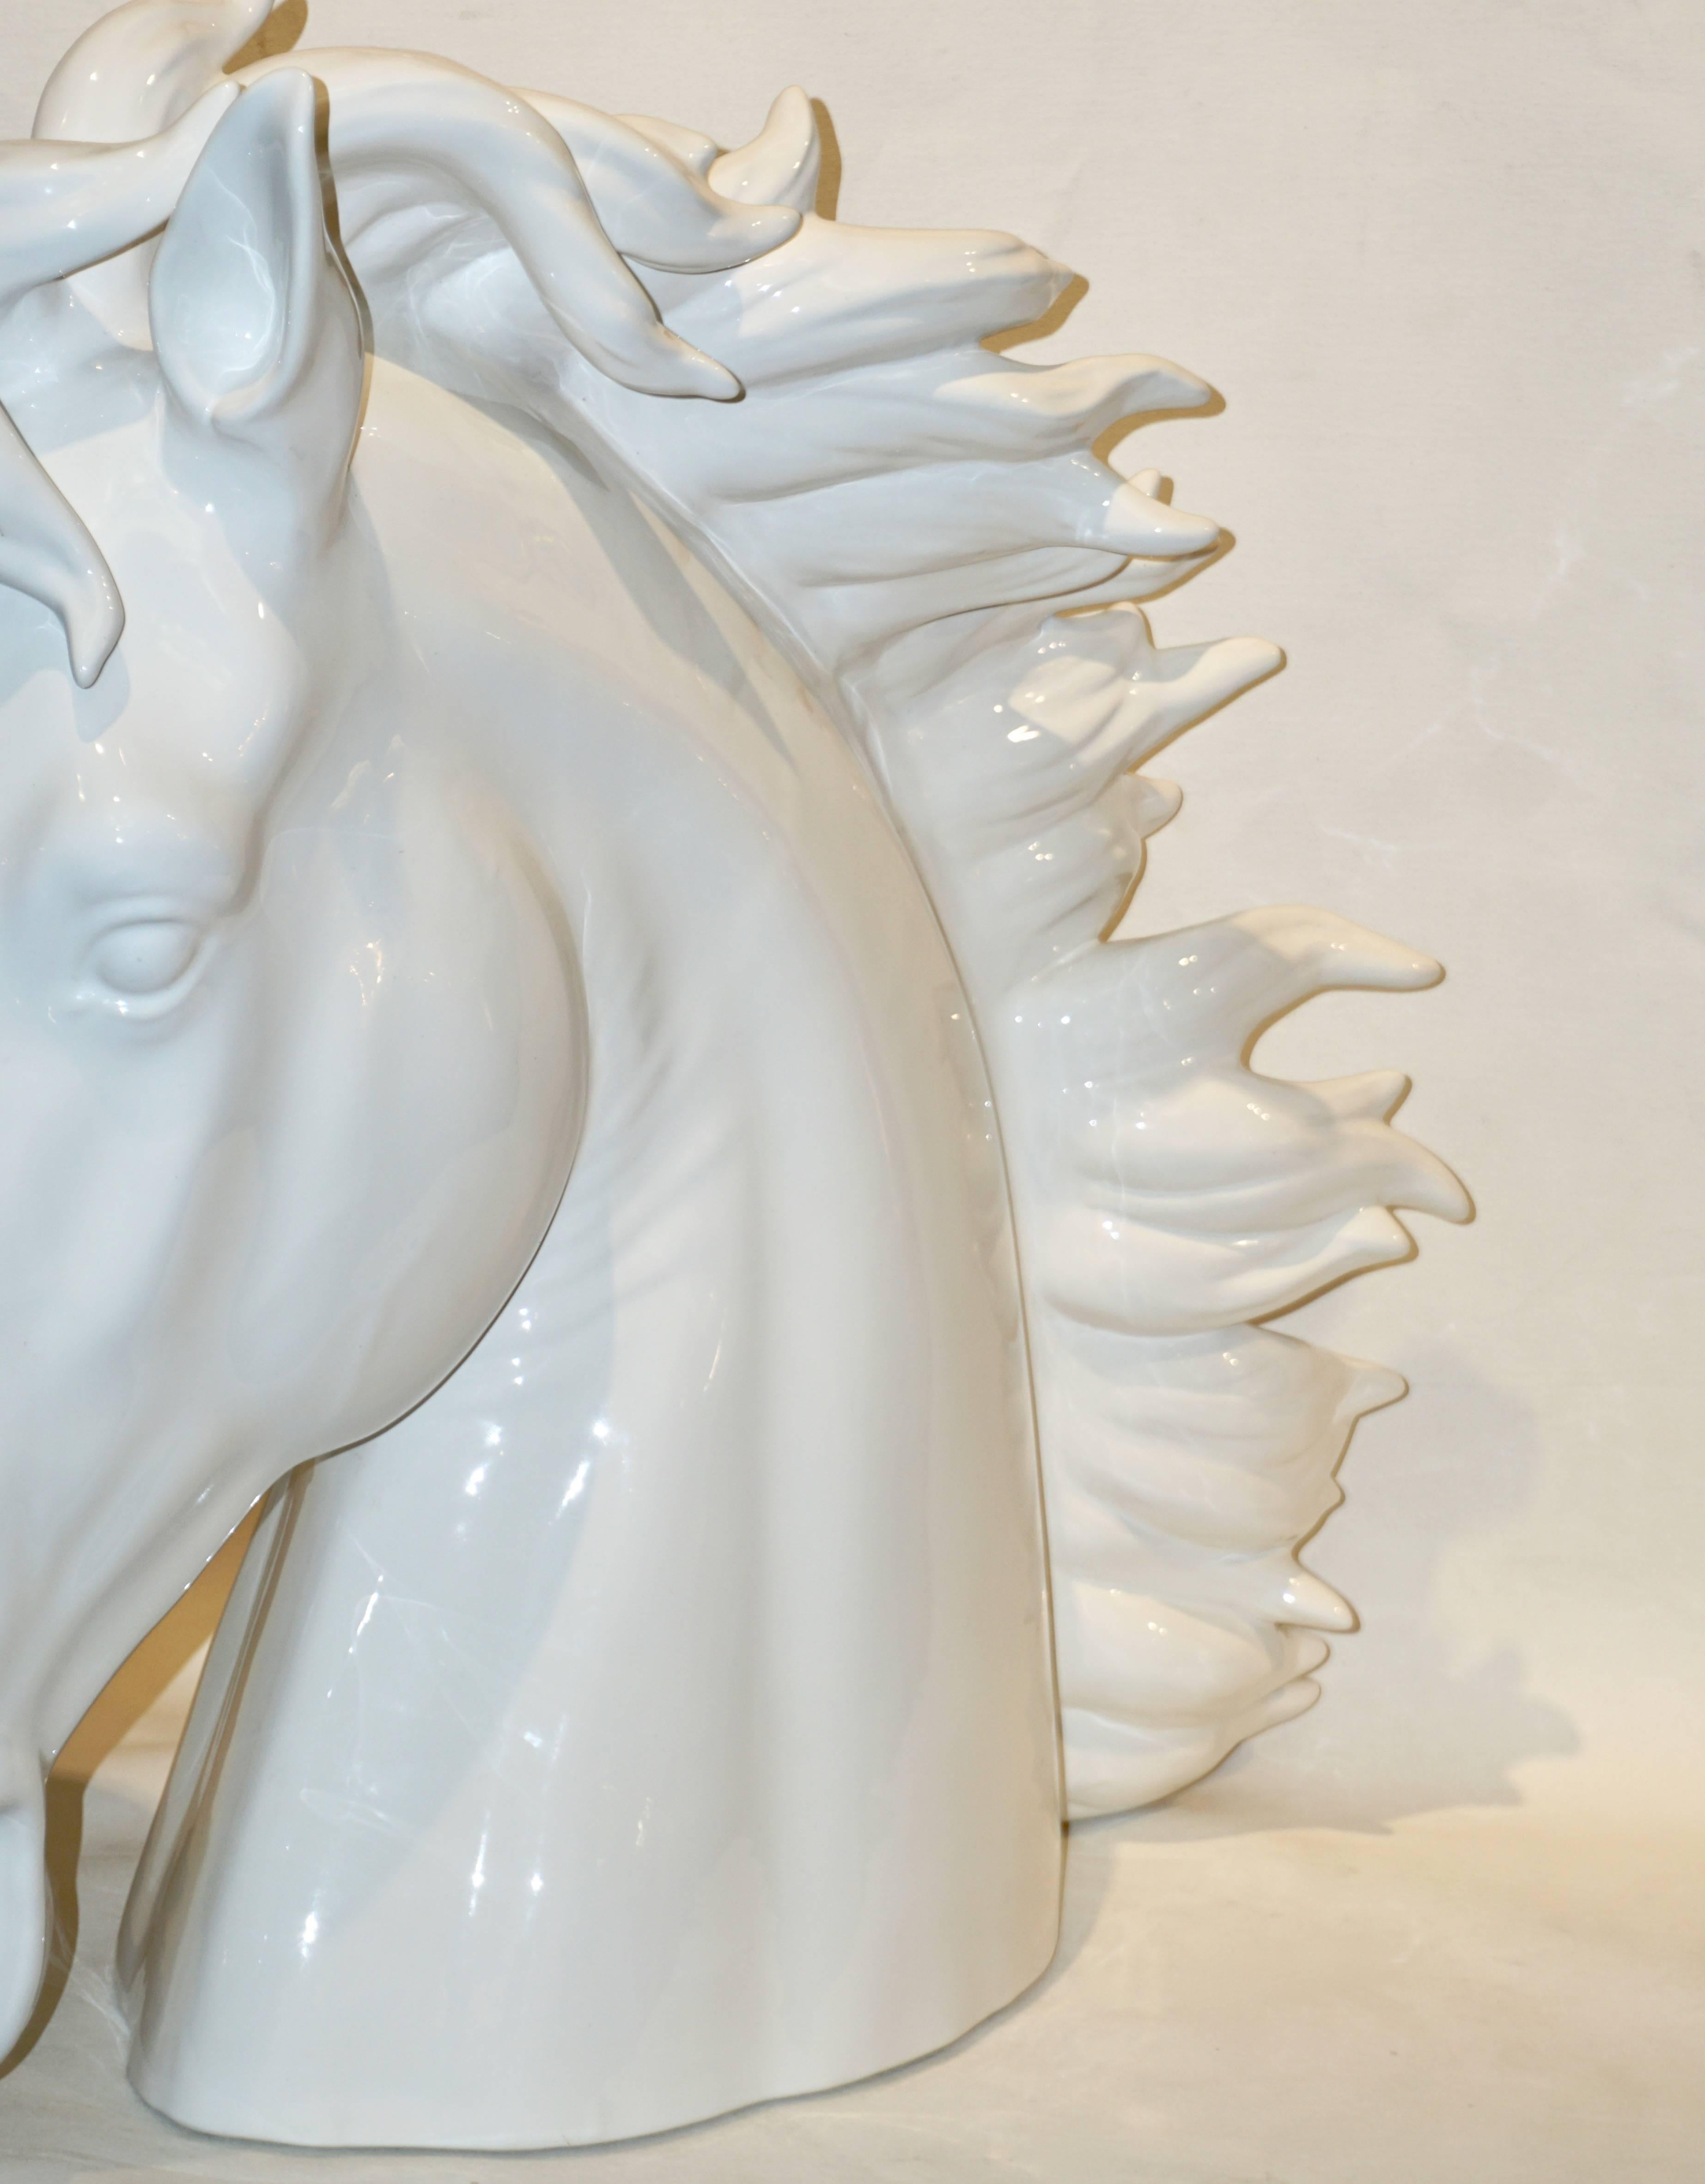 Modern Art Deco Design Oversized Black and White Ceramic Horse Head Sculptures For Sale 5